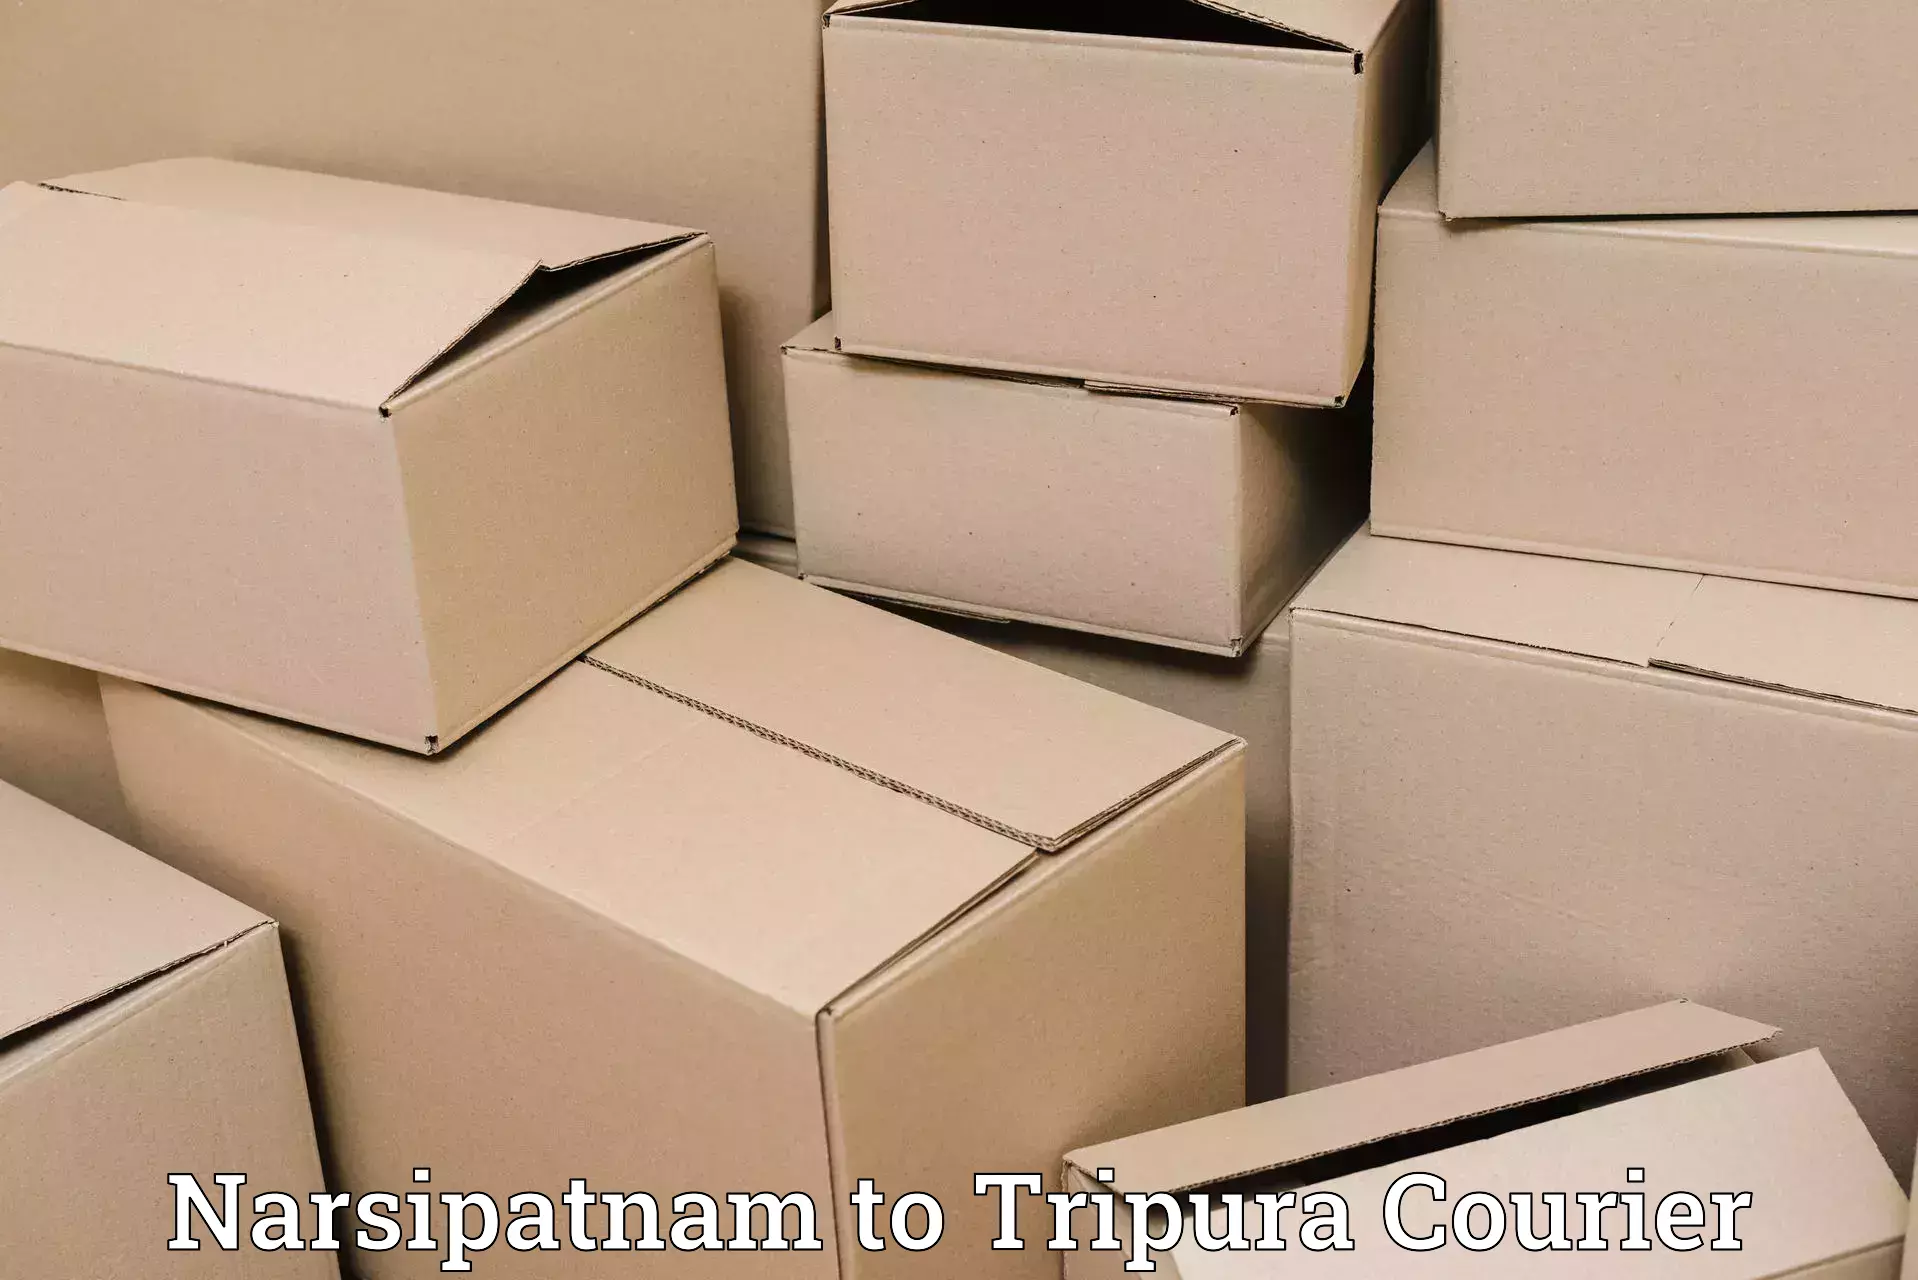 Seamless shipping experience Narsipatnam to Tripura